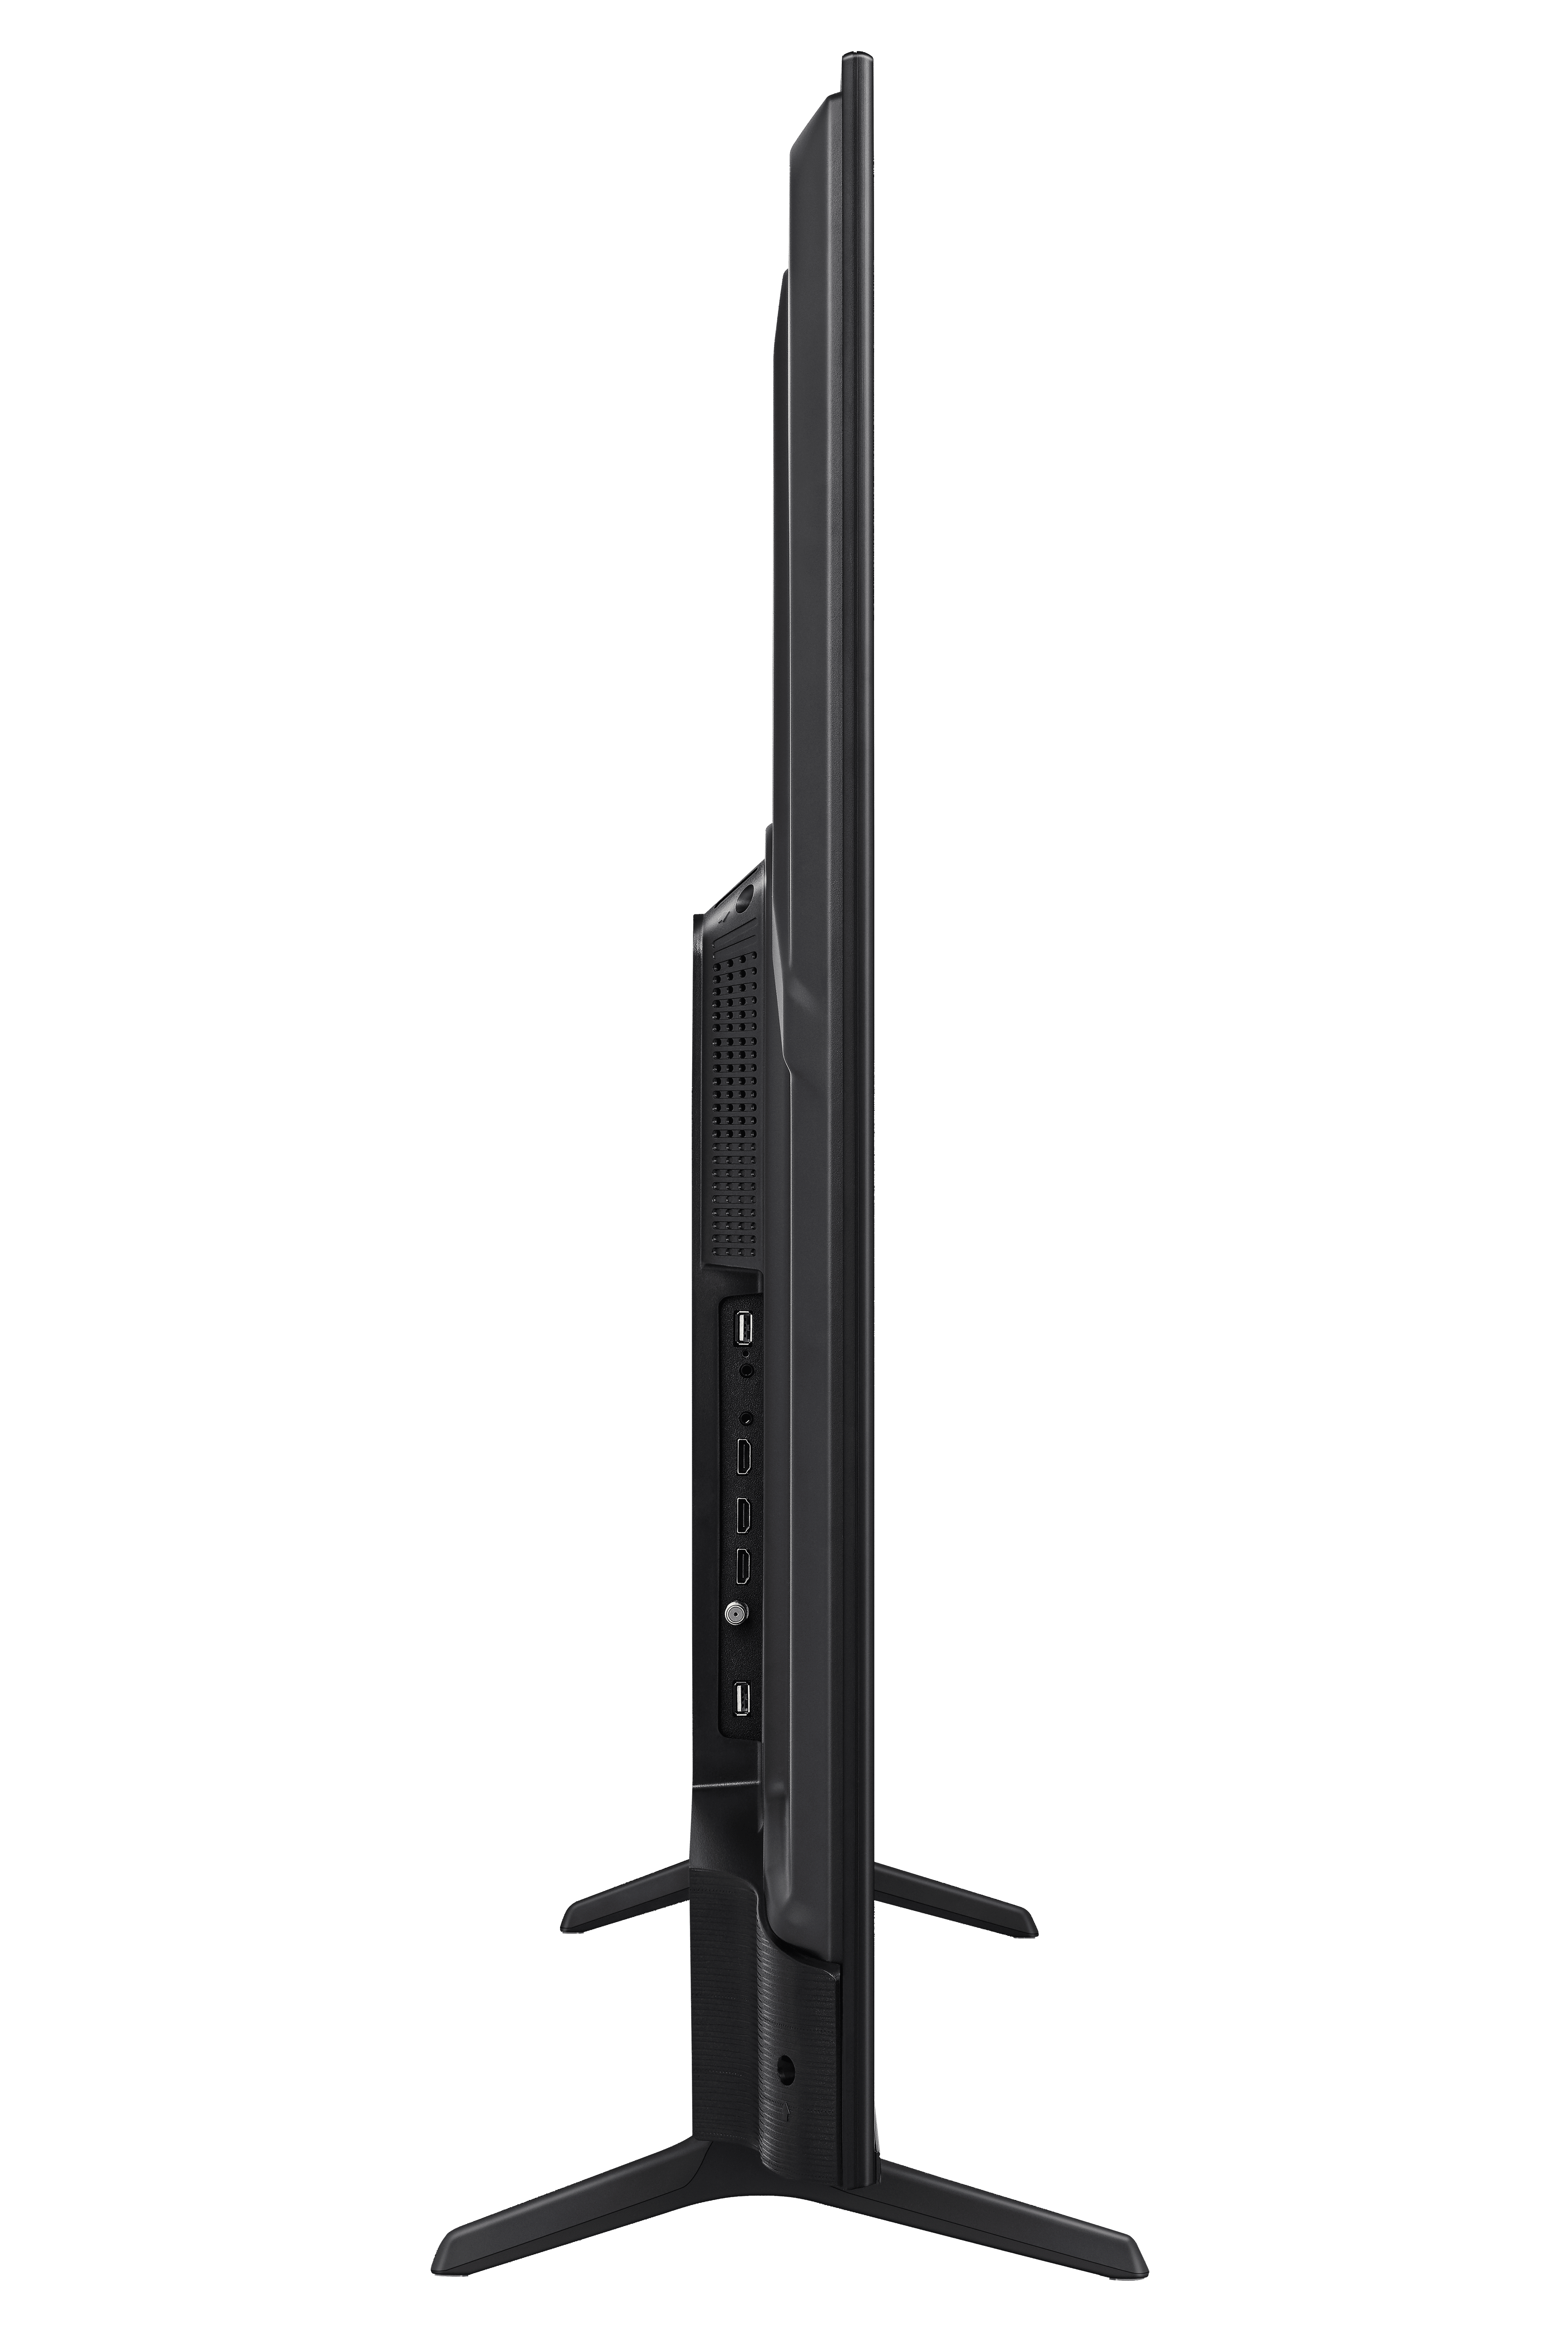 Hisense A6K 139 cm (55 inch) Ultra HD (4K) LED Smart Google TV